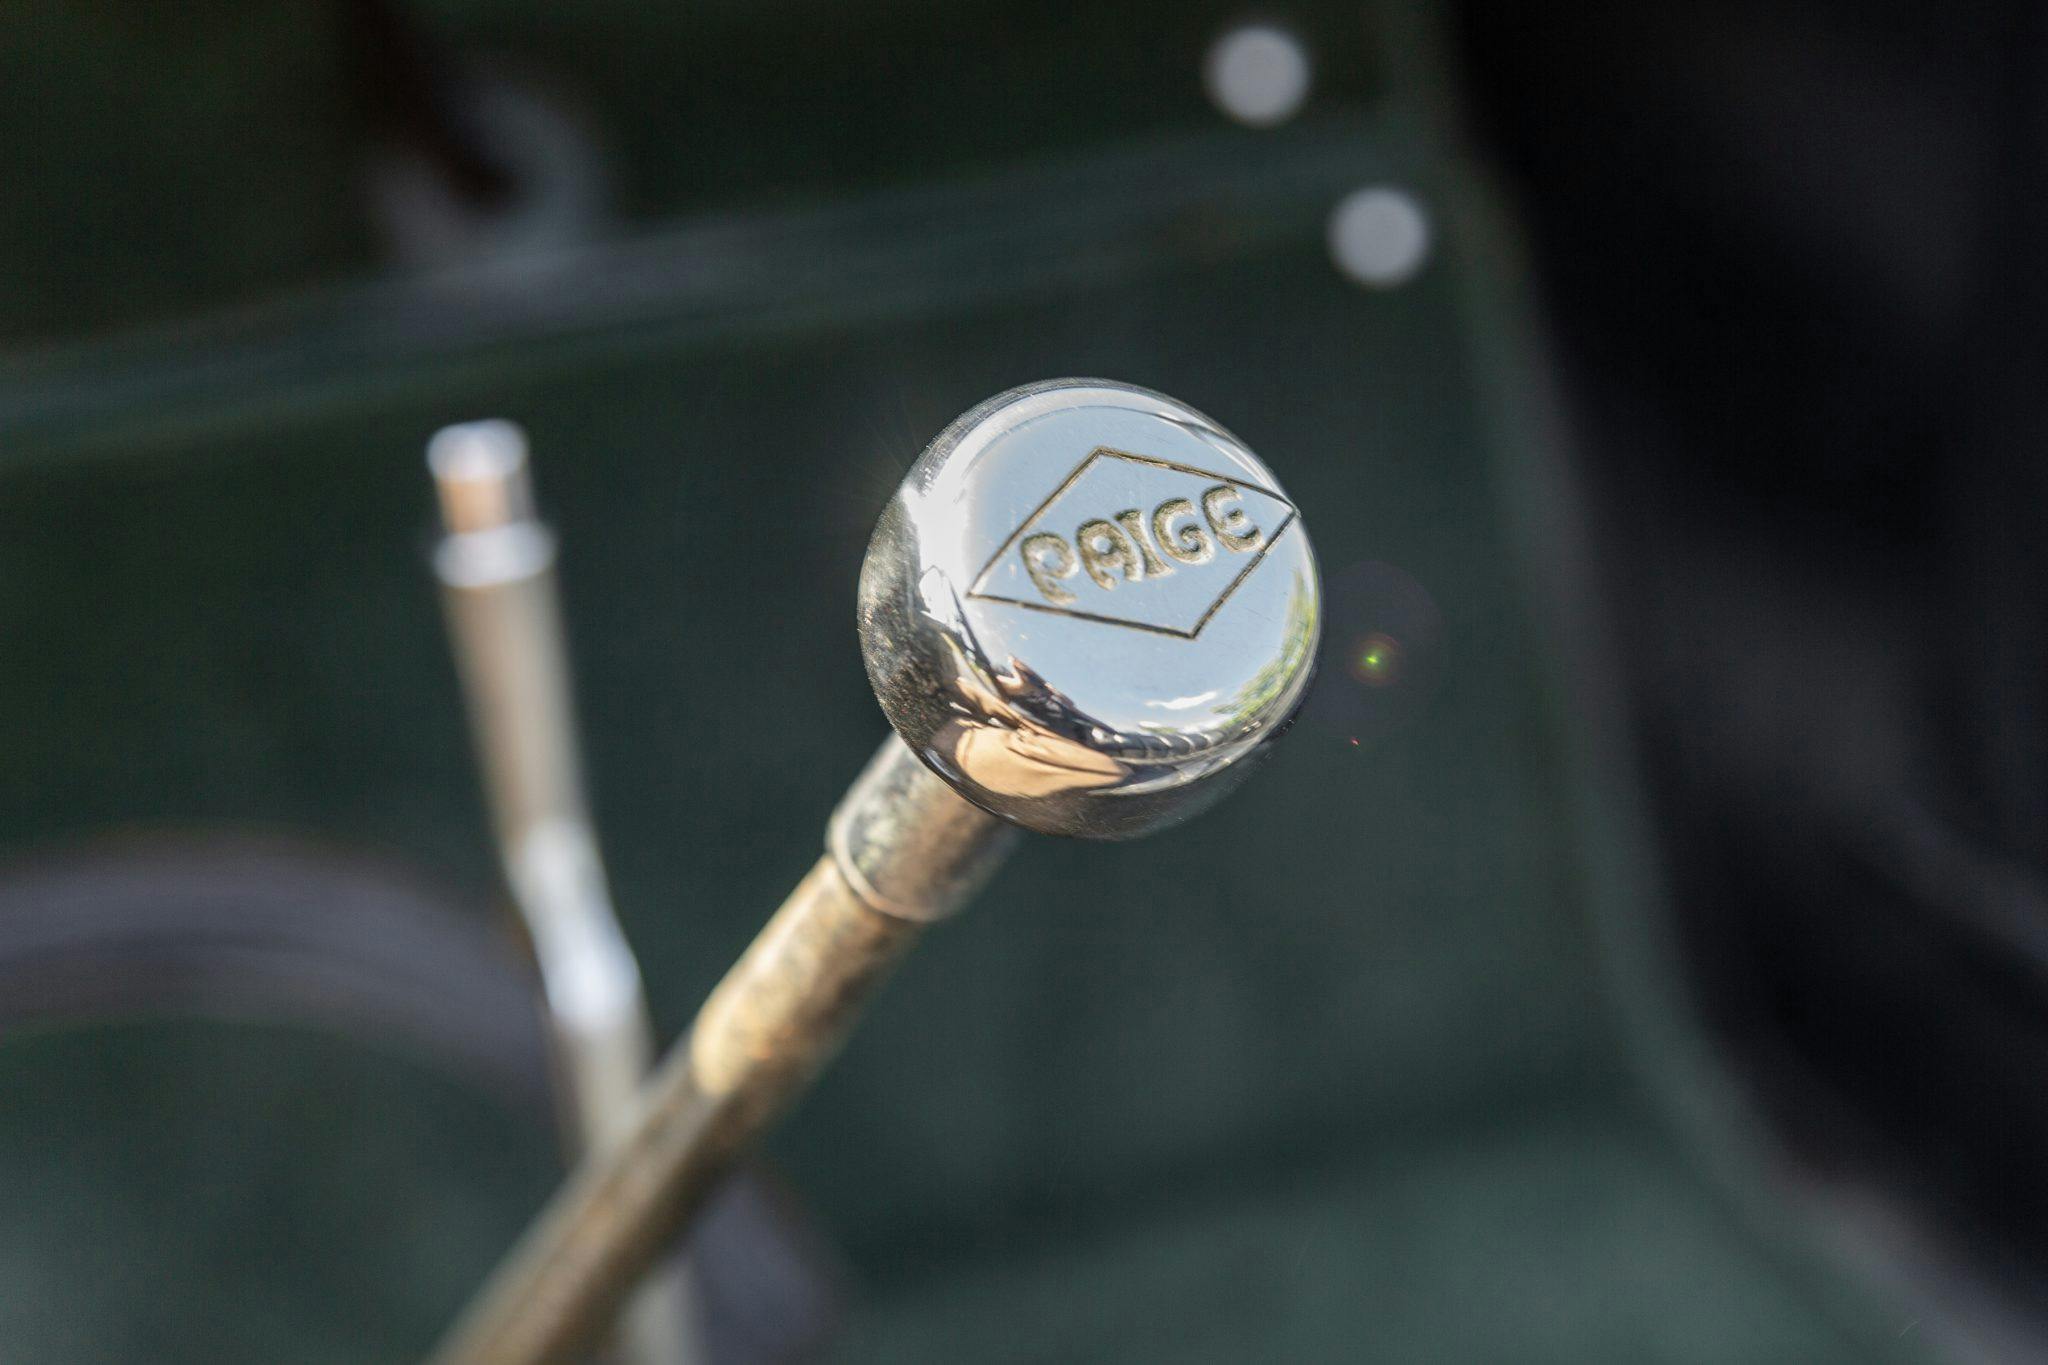 1921 Paige Vintage car interior shifter knob detail